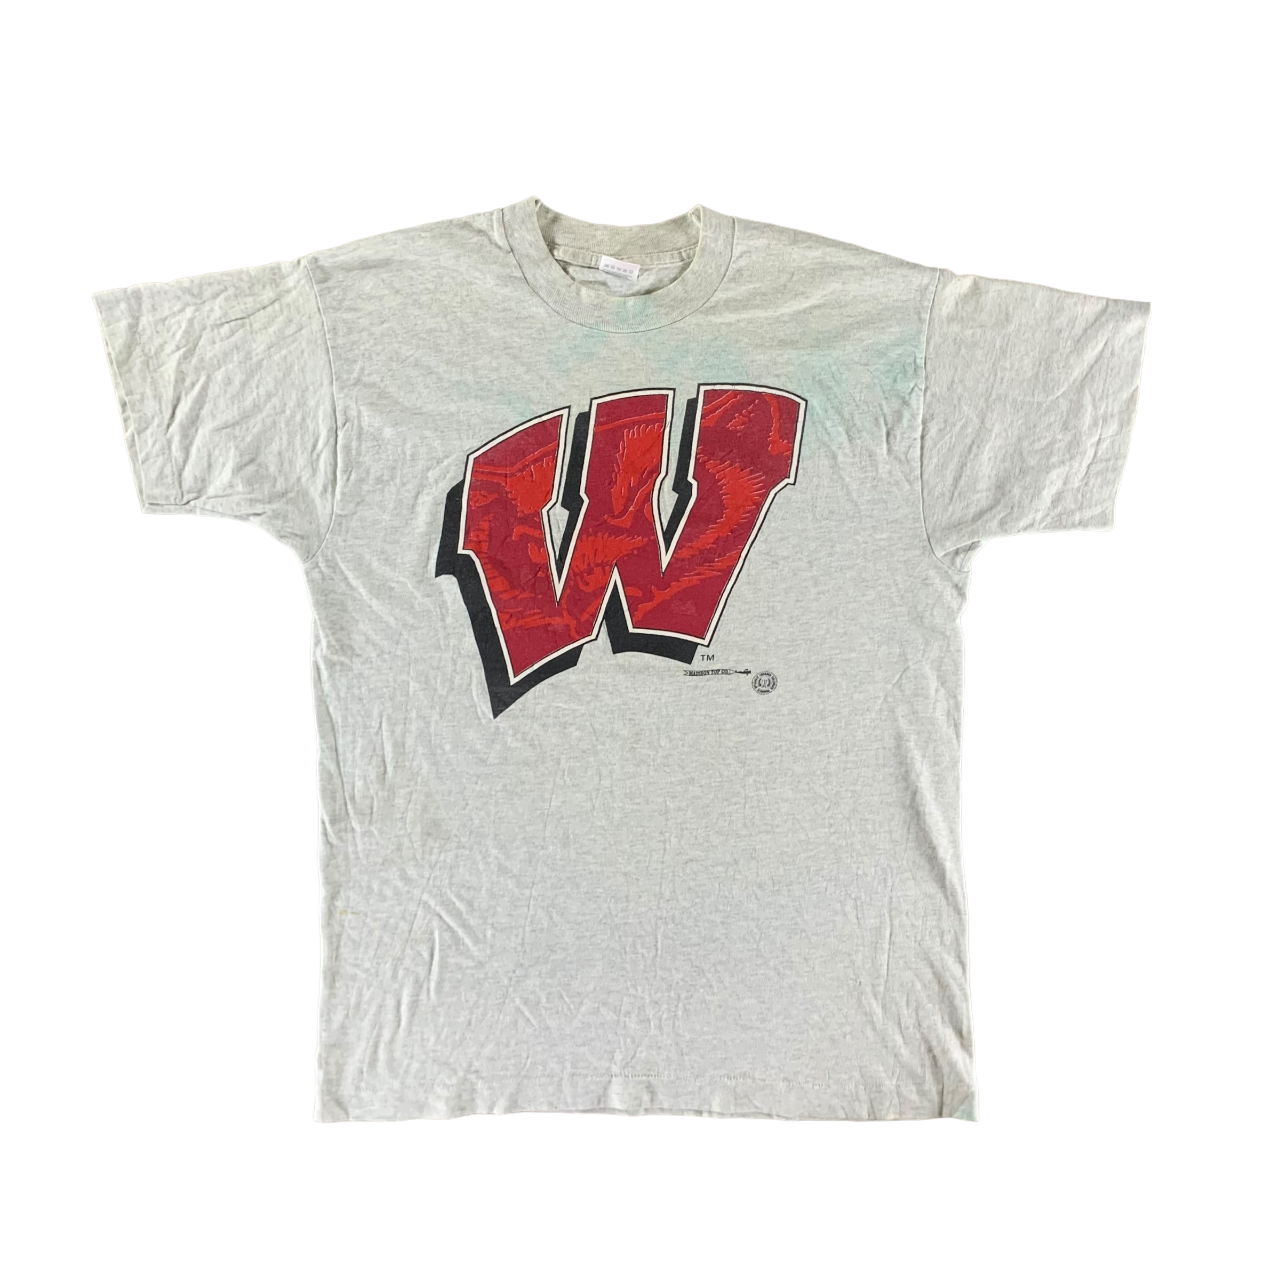 Vintage 1990s University of Wisconsin T-shirt size Large